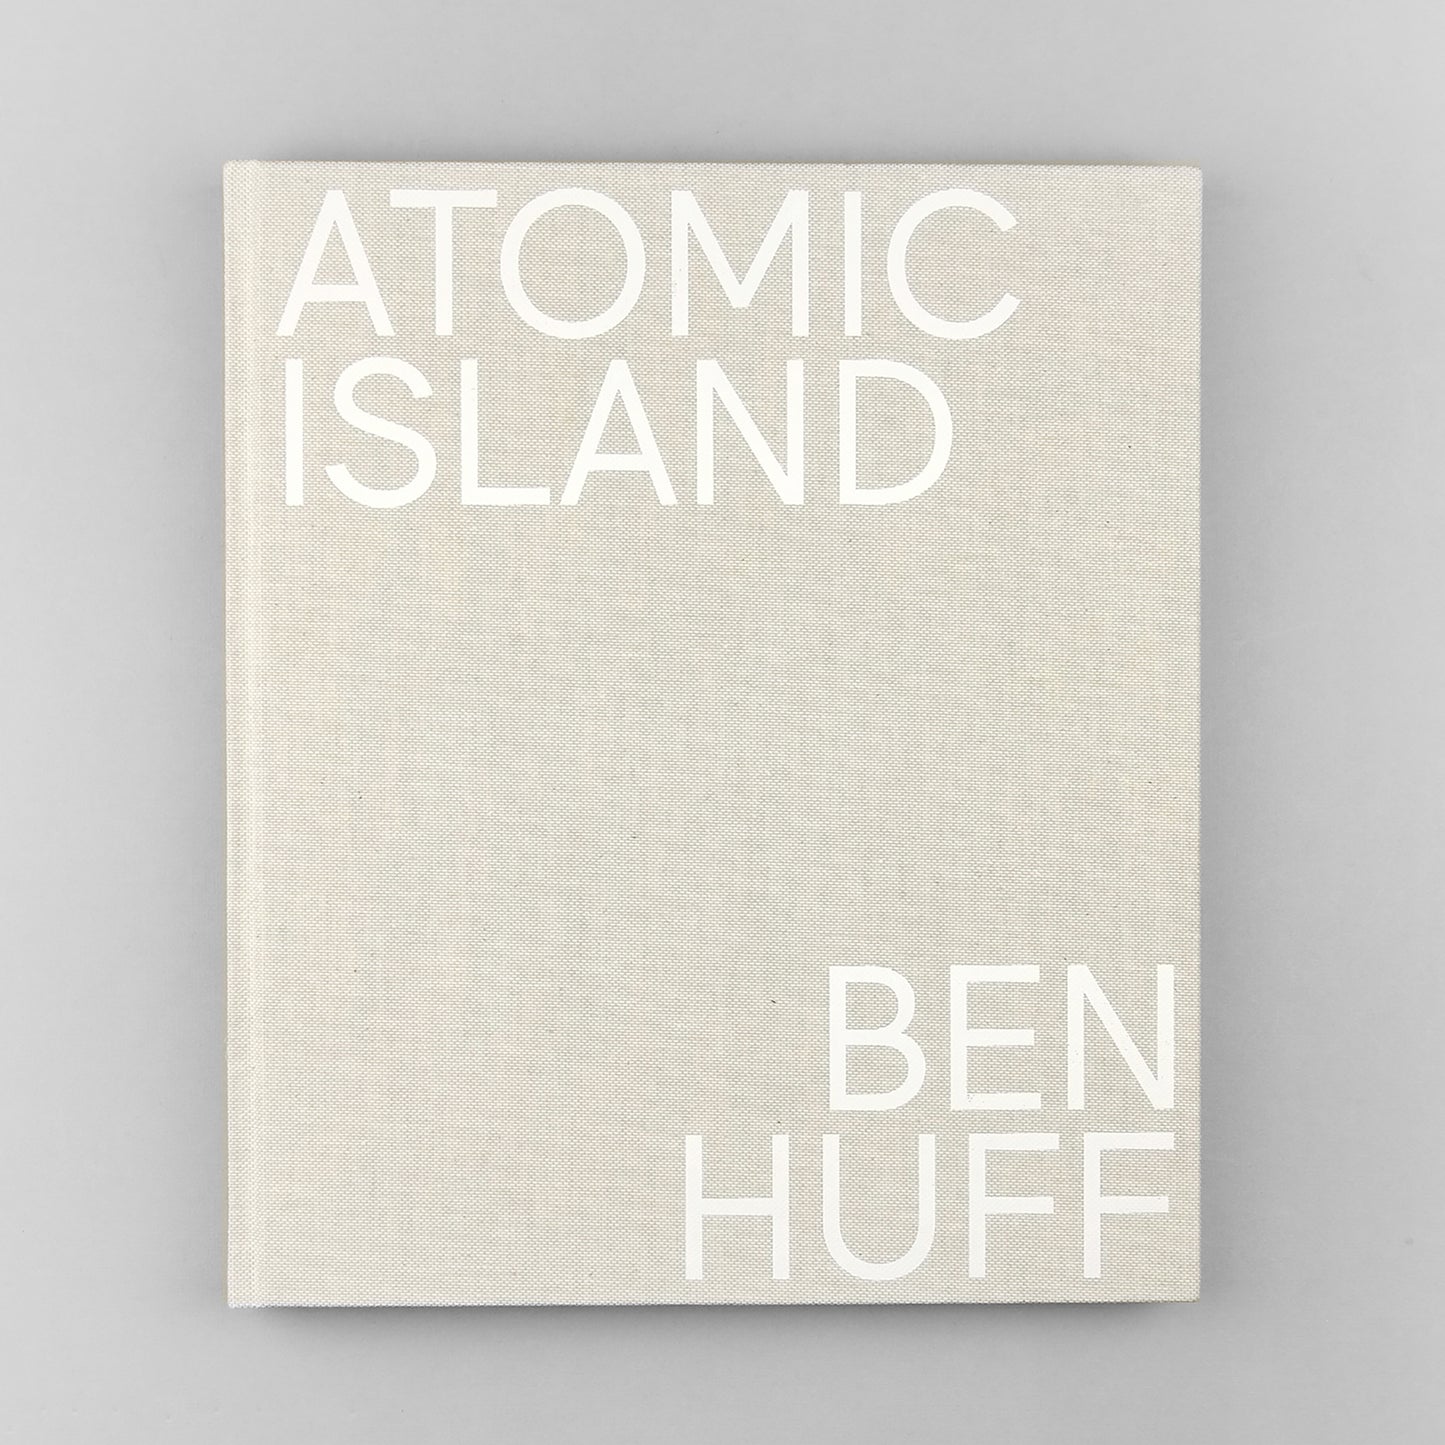 Atomic Island, Ben Huff